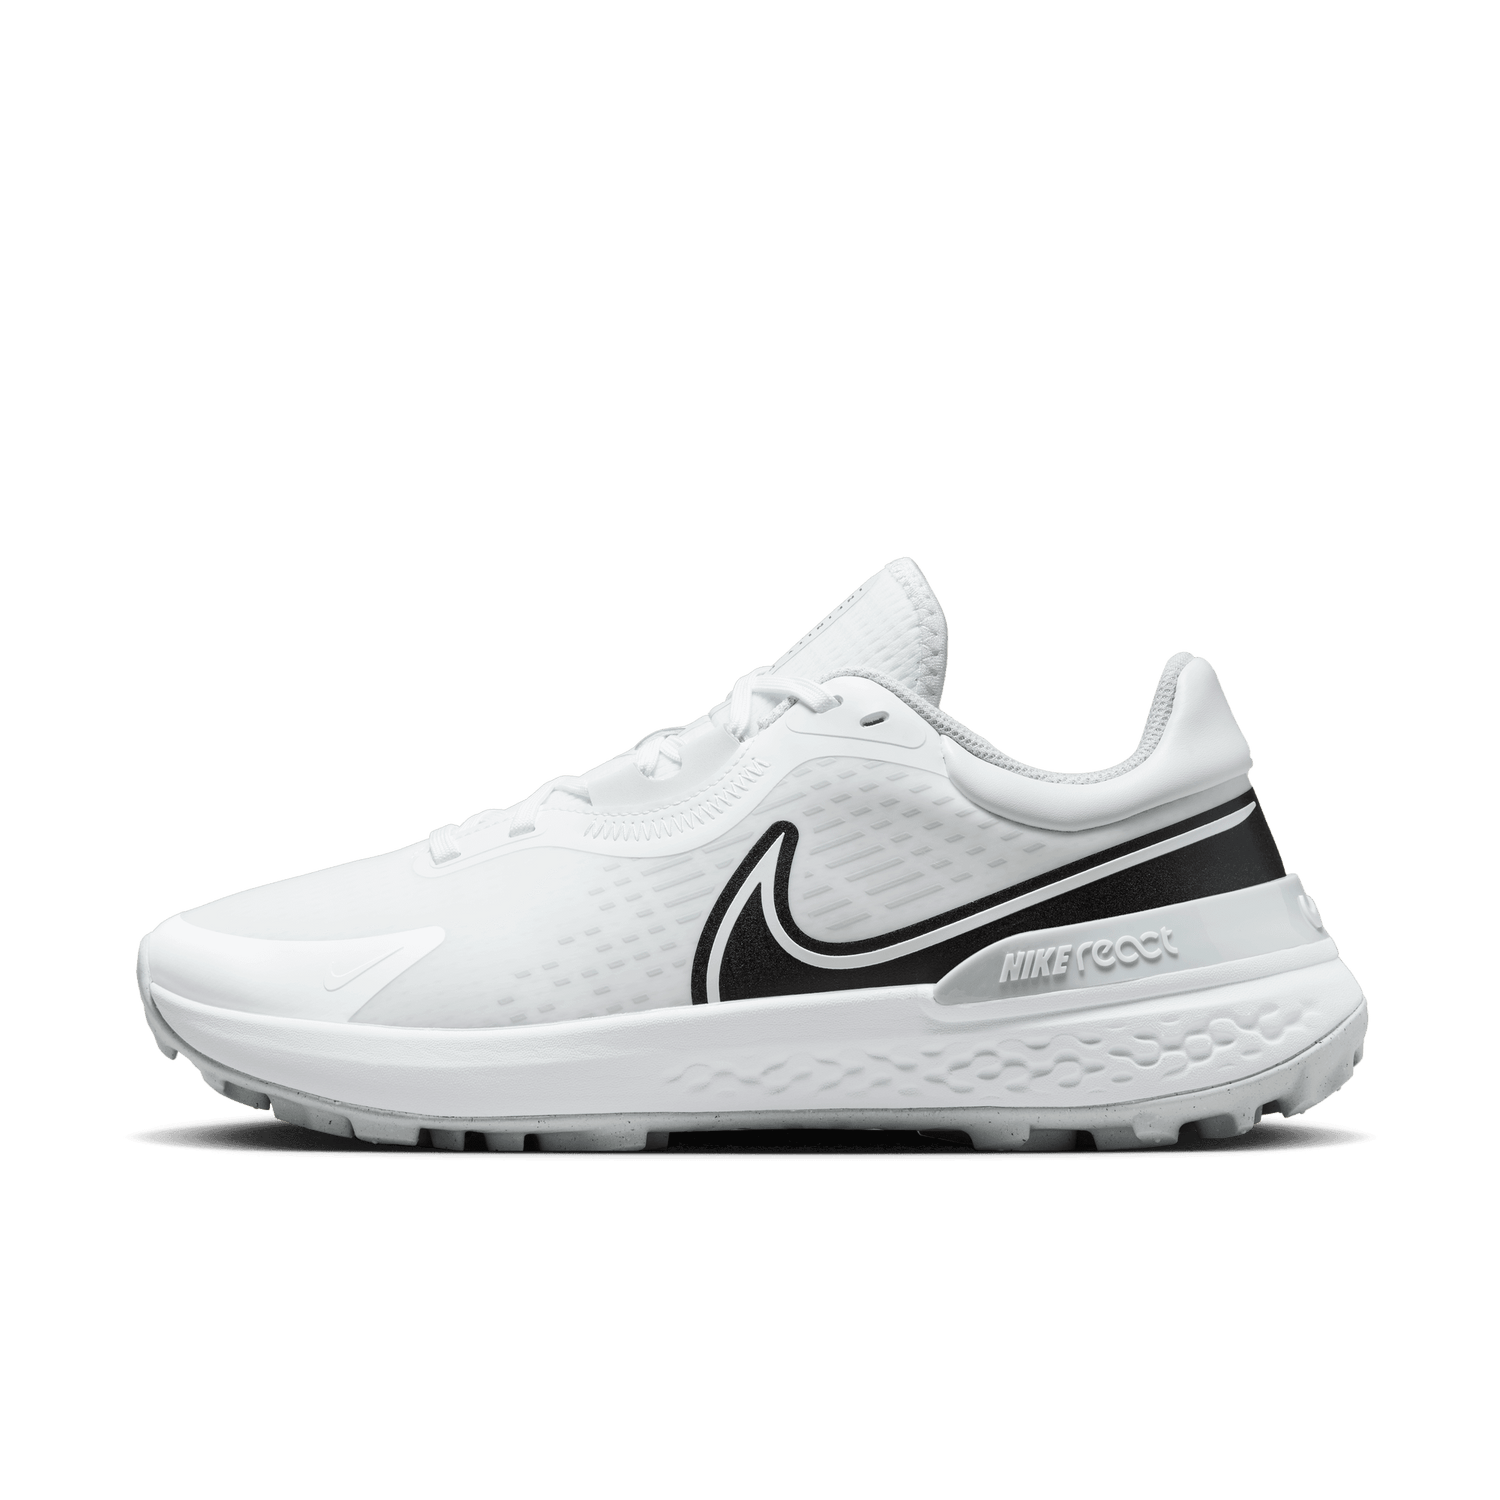 Nike Golf Infinity Pro 2 Spikeless Golf Shoes DJ5593 White/Black/Pure Platinum 101 8 